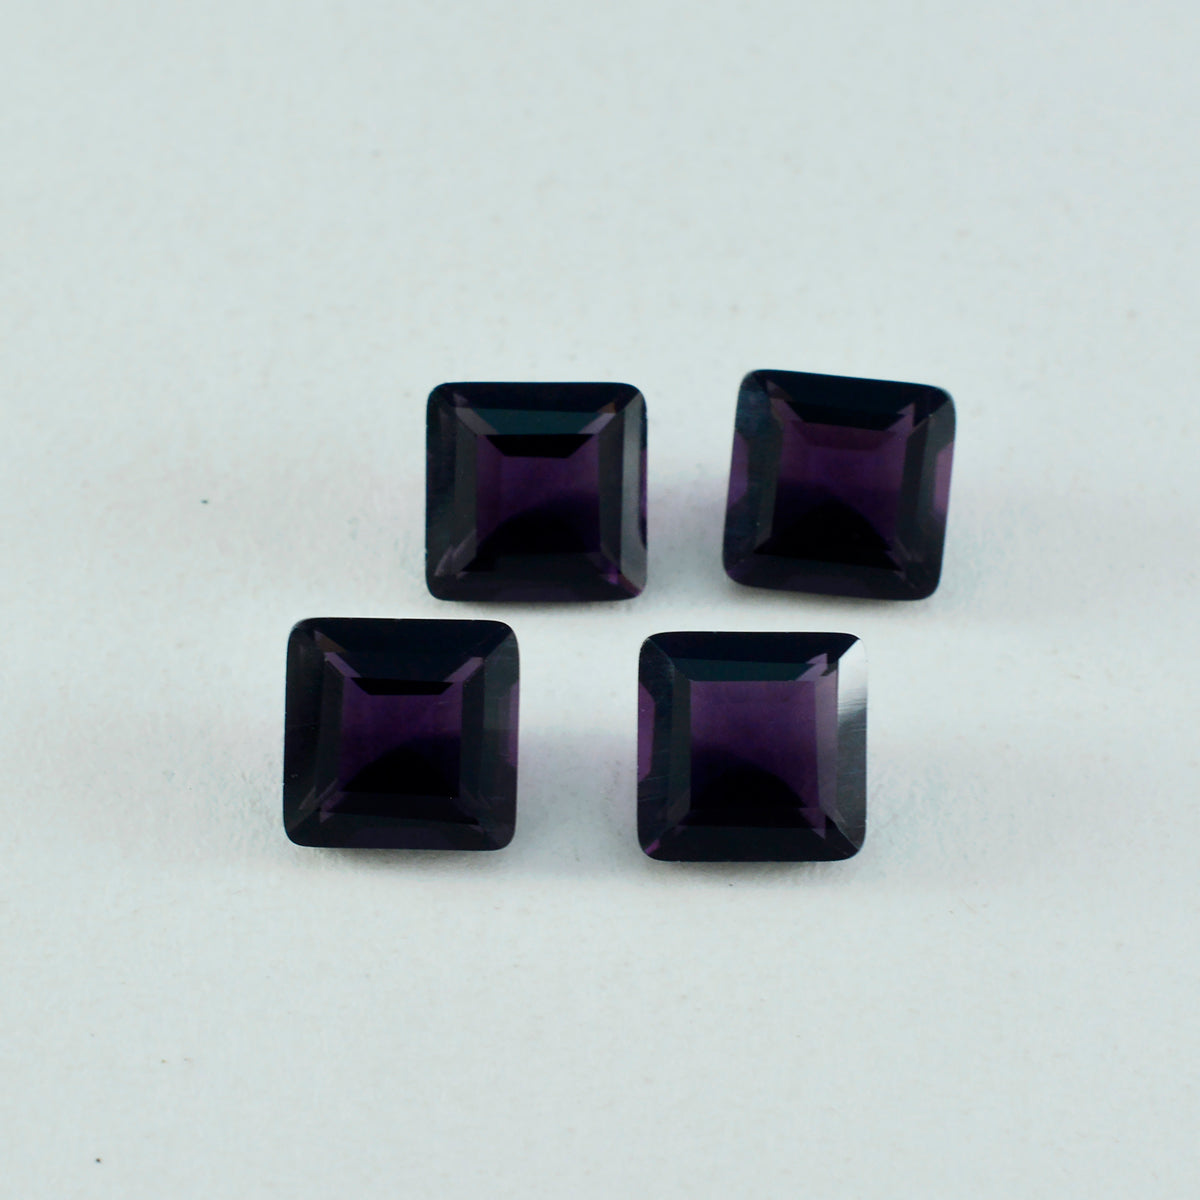 riyogems 1st lila ametist cz facetterad 13x13 mm fyrkantig form en kvalitetspärla